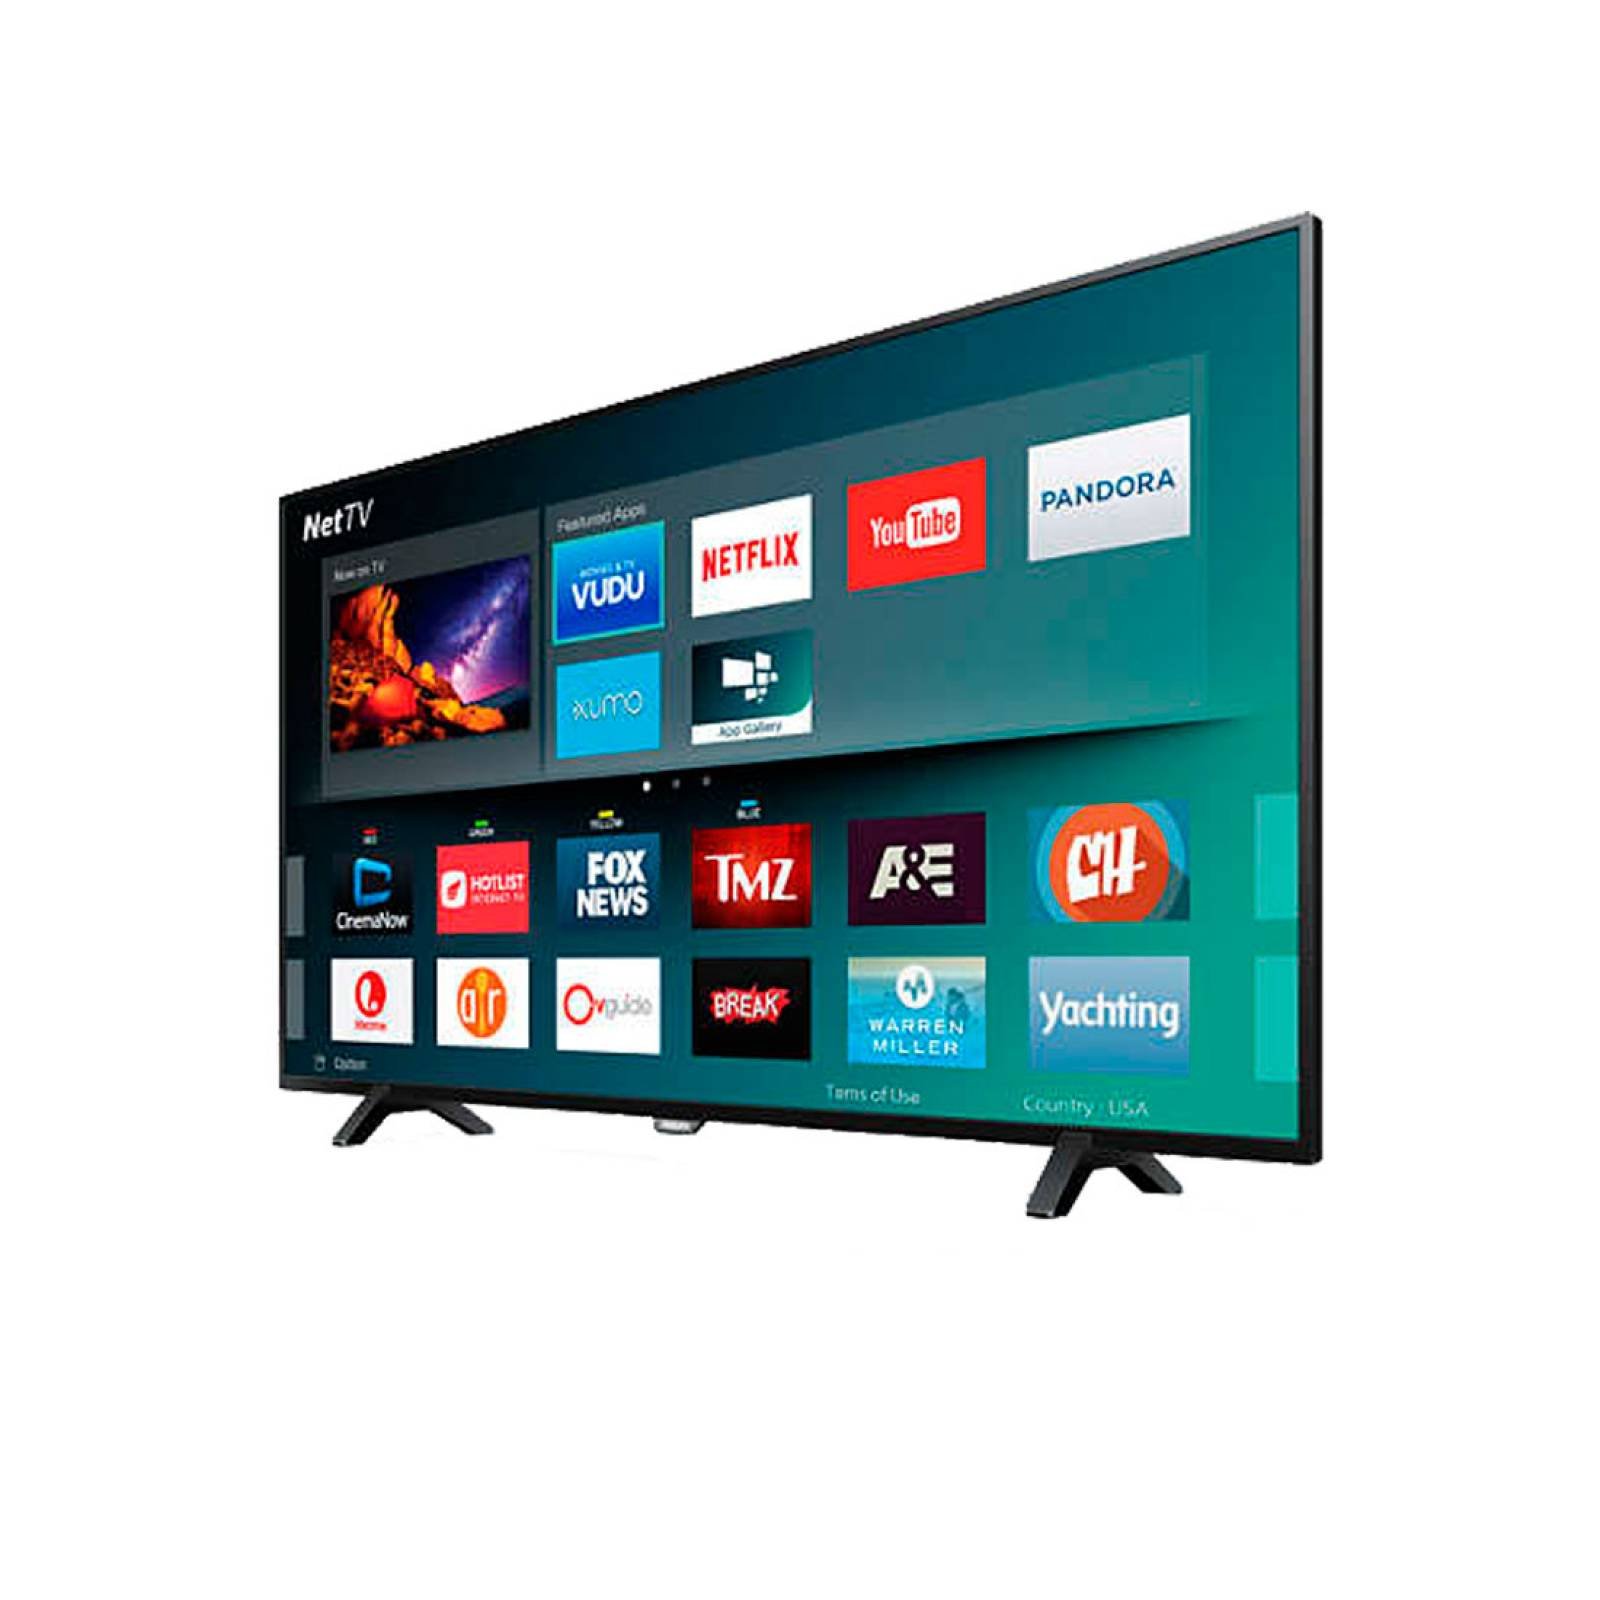 Smart TV Pantalla HDR 50 Pulg 4K HD 50PFL5602/F7 Philips Reacondicionado